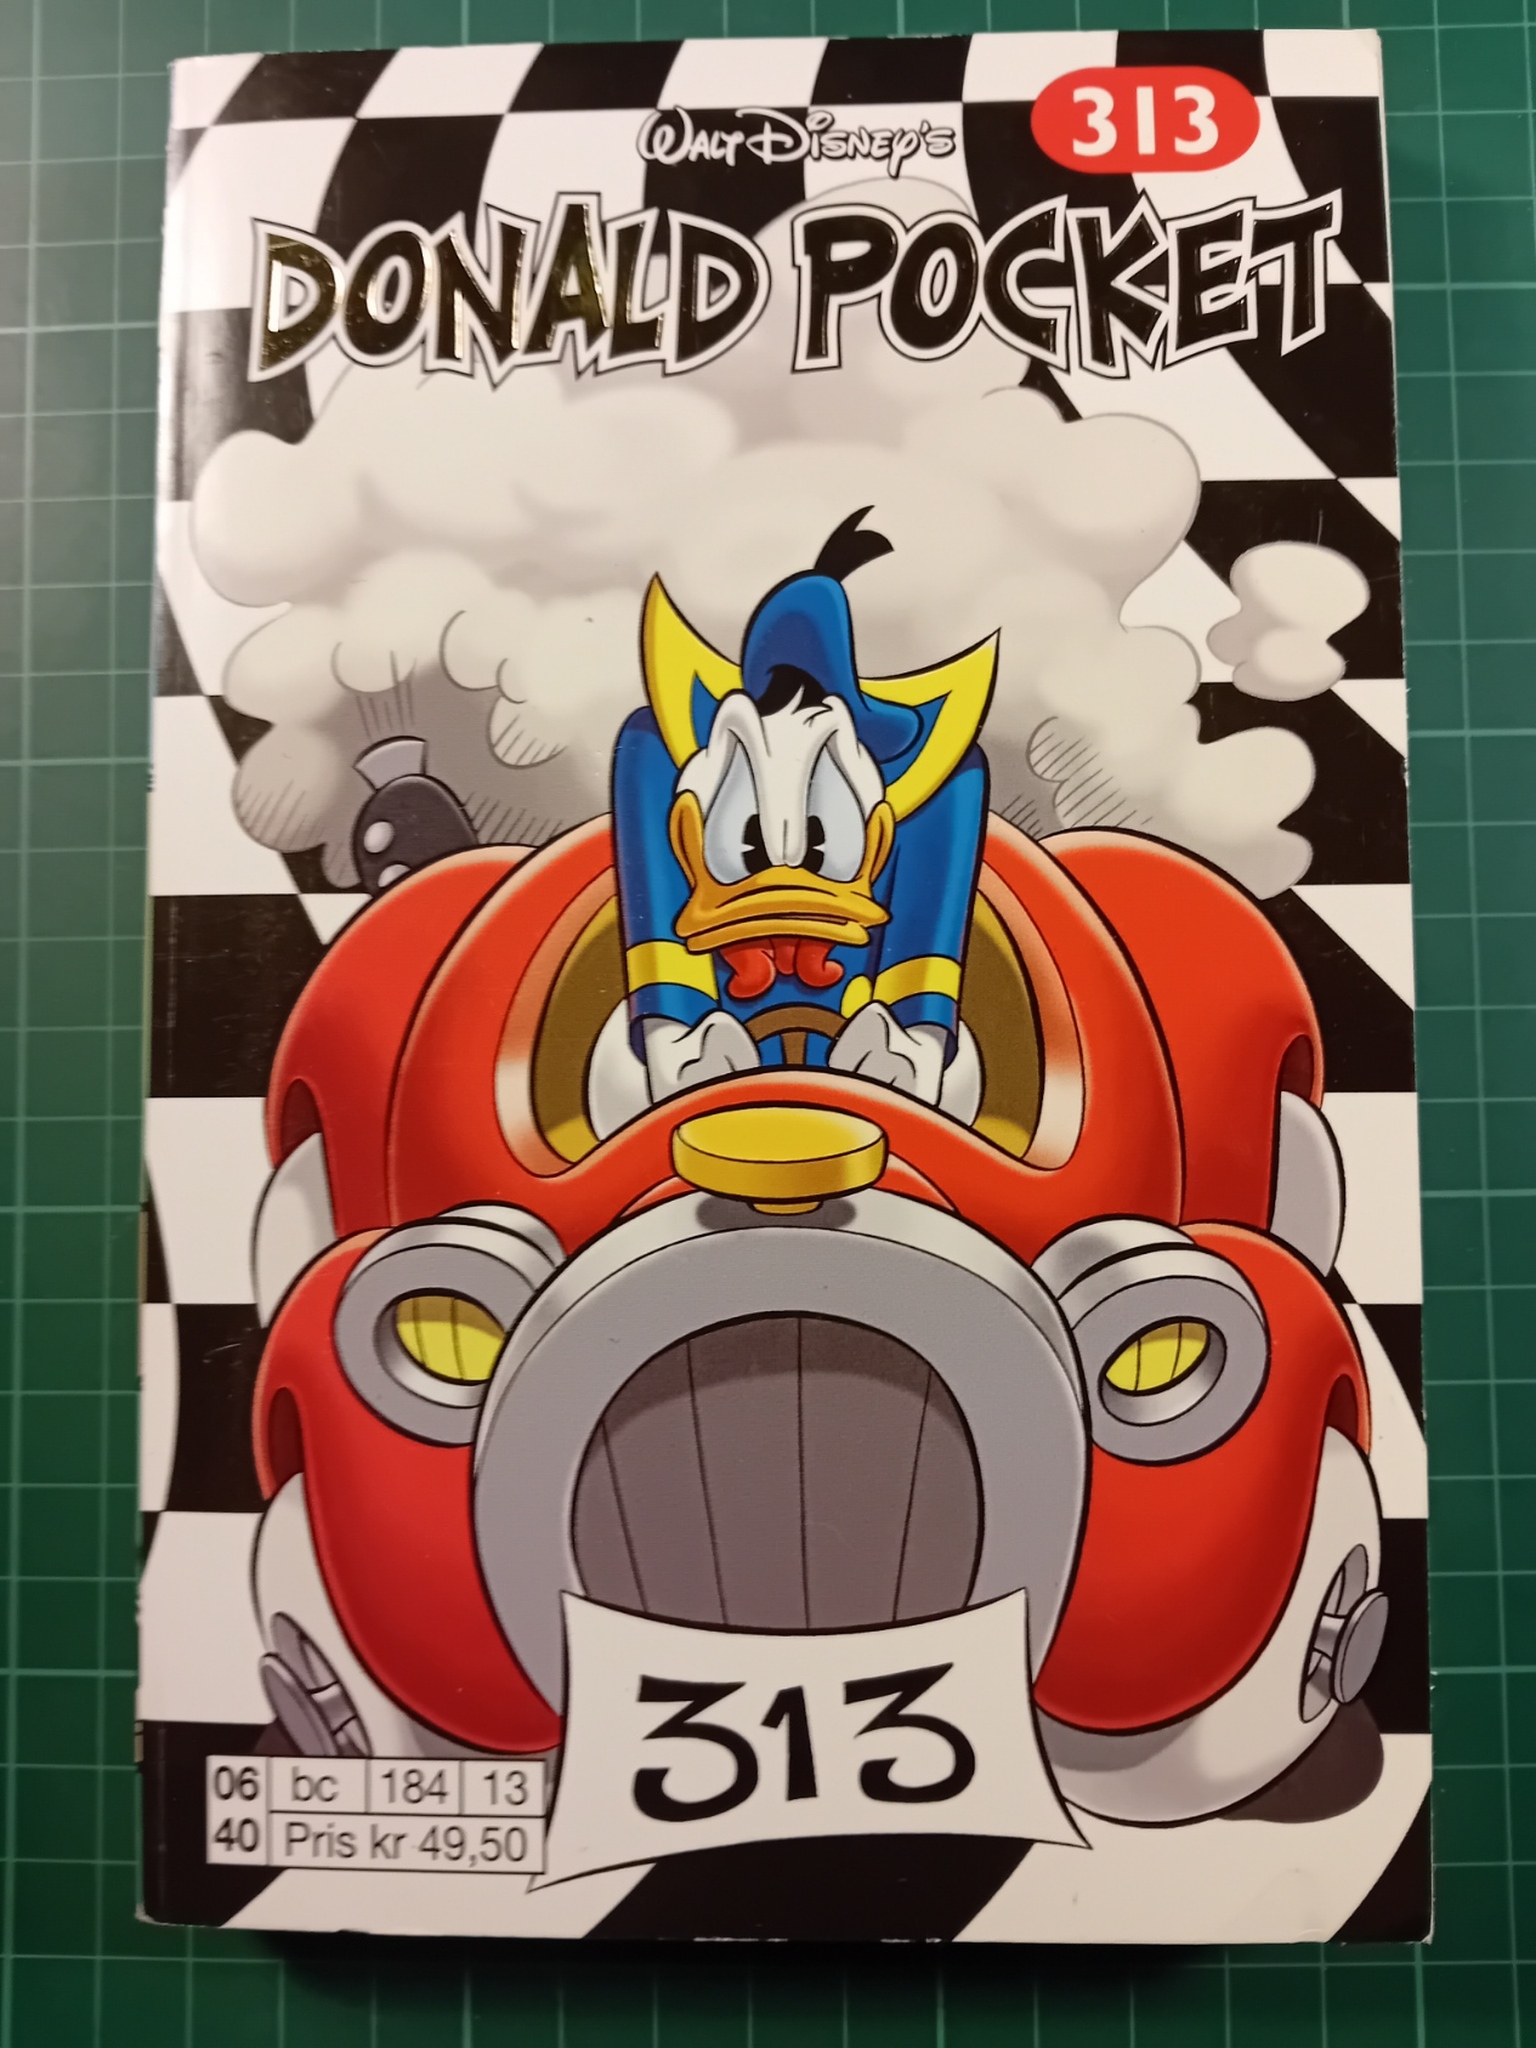 Donald Pocket 313